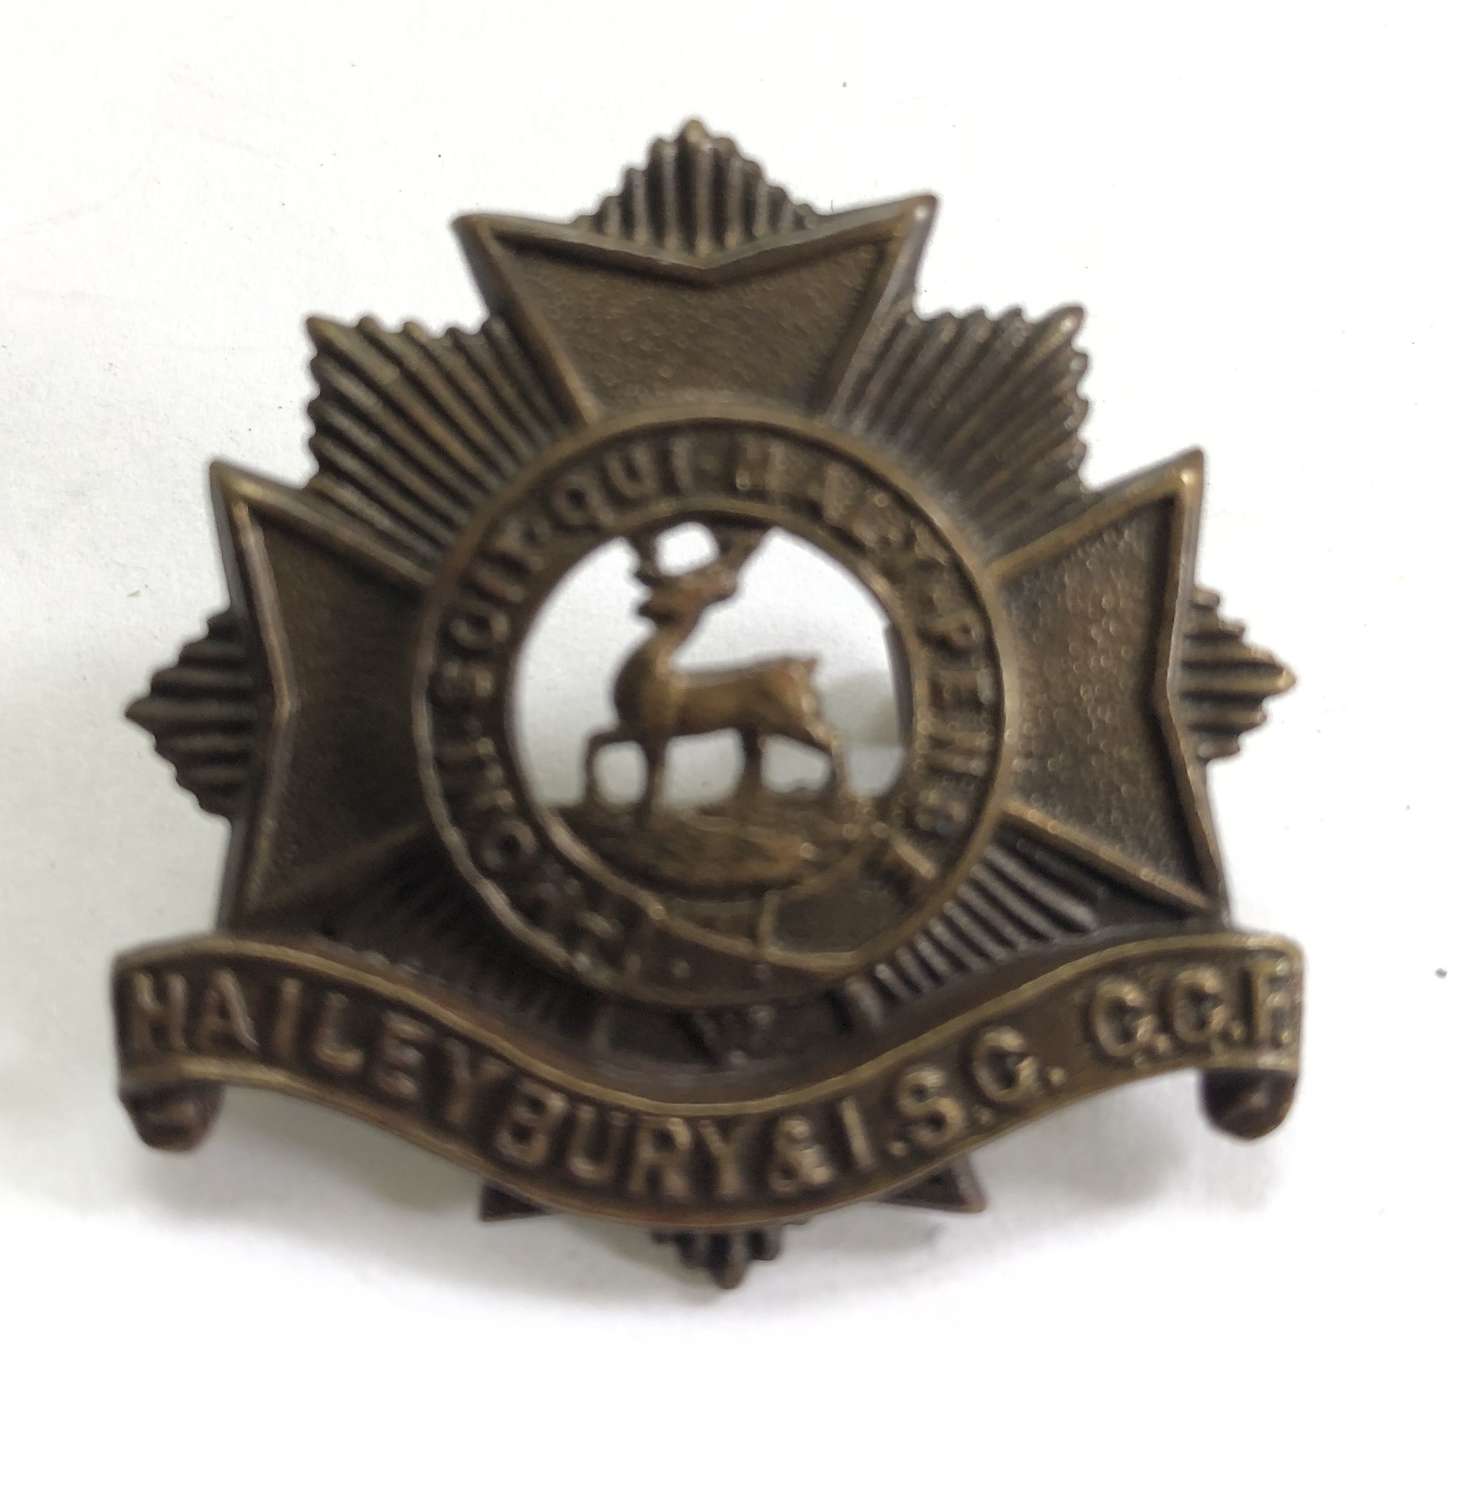 Haileybury & Imperial Service College CCF OSD bronze cap badge